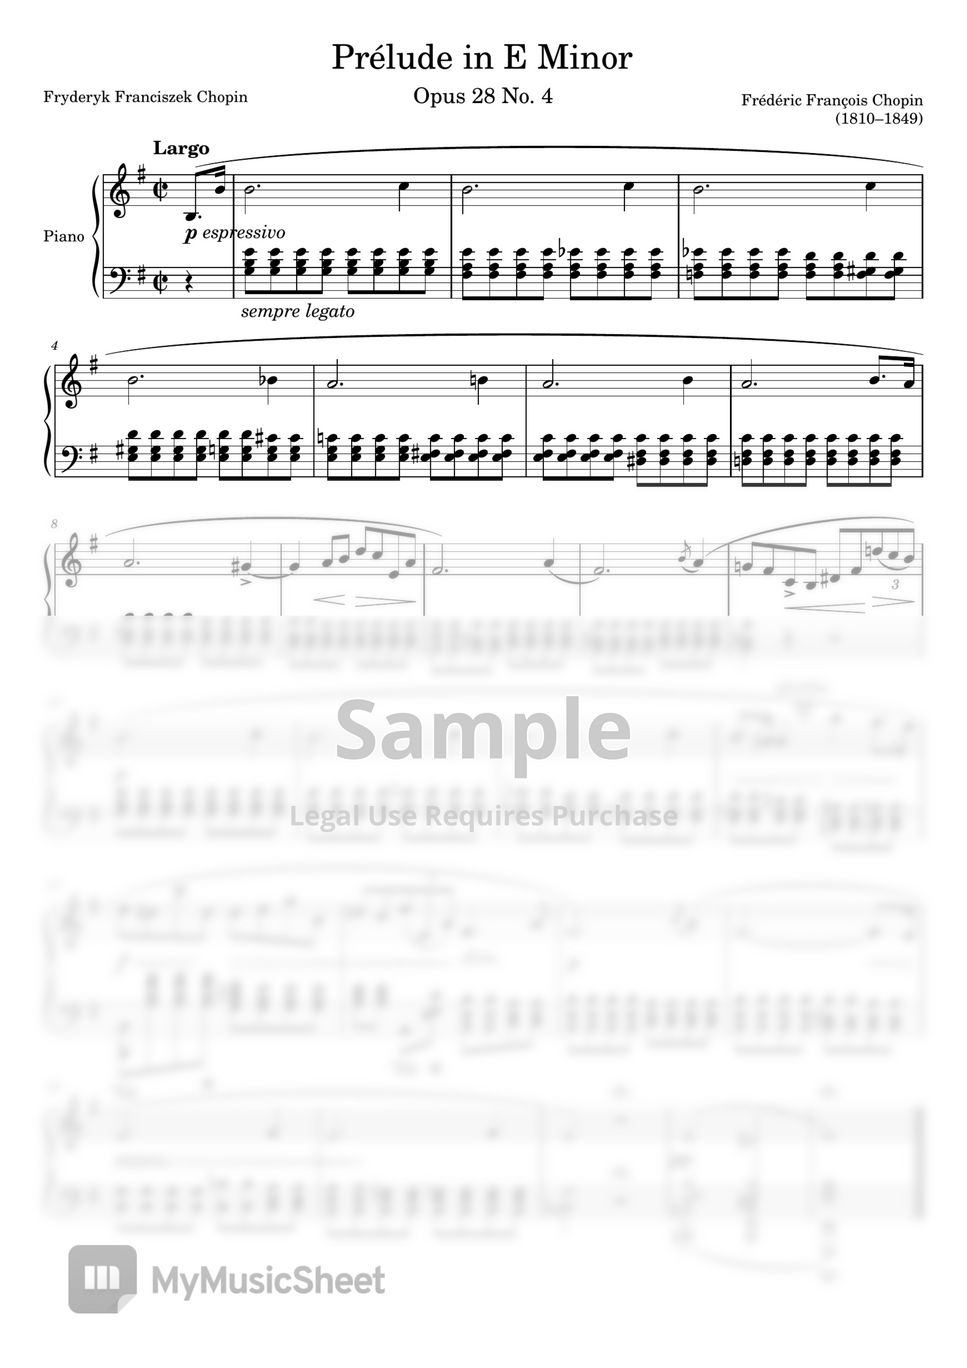 F. Chopin - Prelude Opus 28 No. 4 in E Minor by F. Chopin